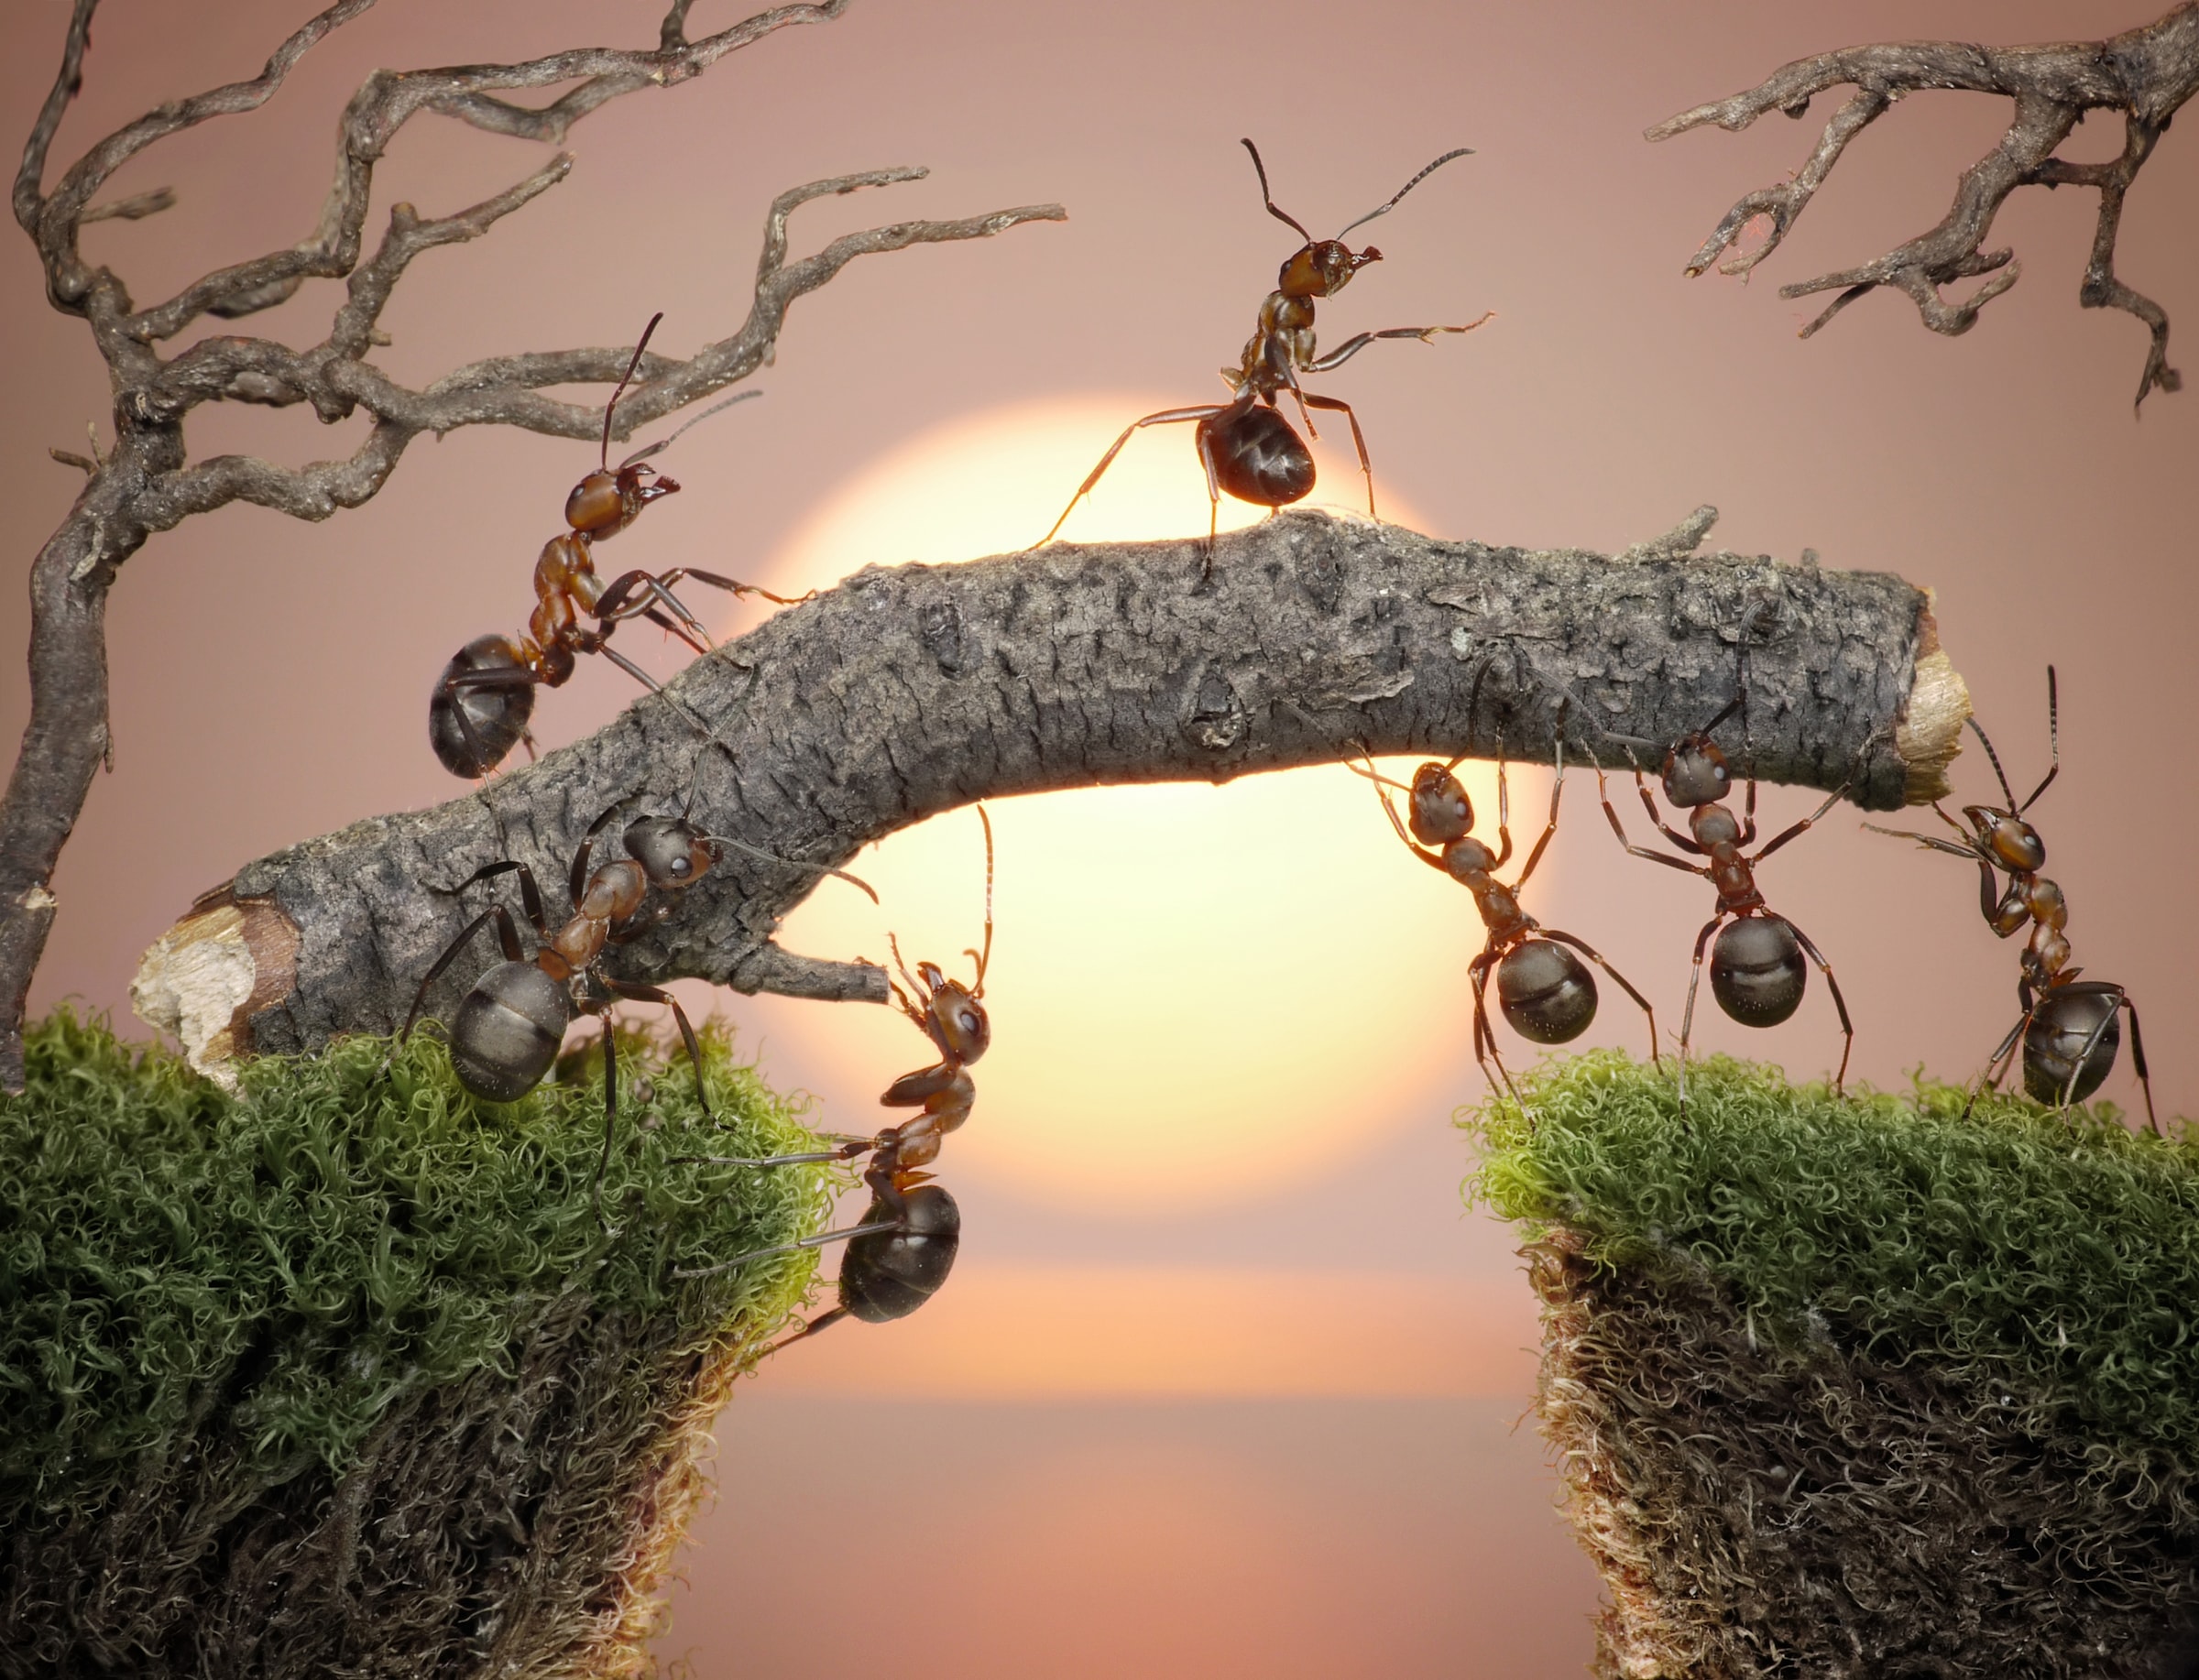 Fototapete »Ants Teamwork«